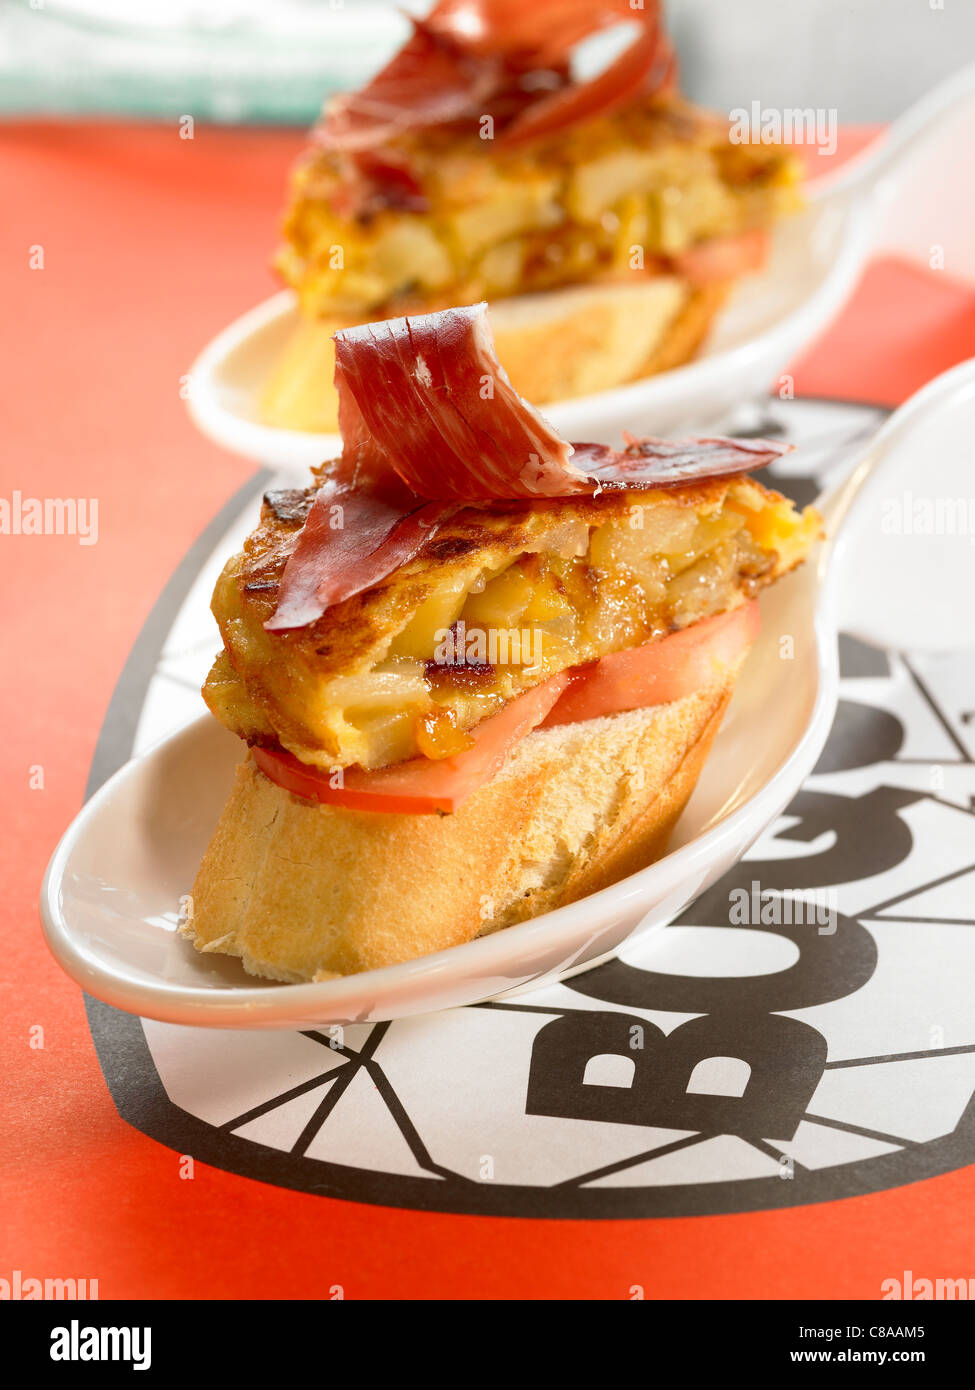 Spanish ham and potato omelette open sandwich Stock Photo